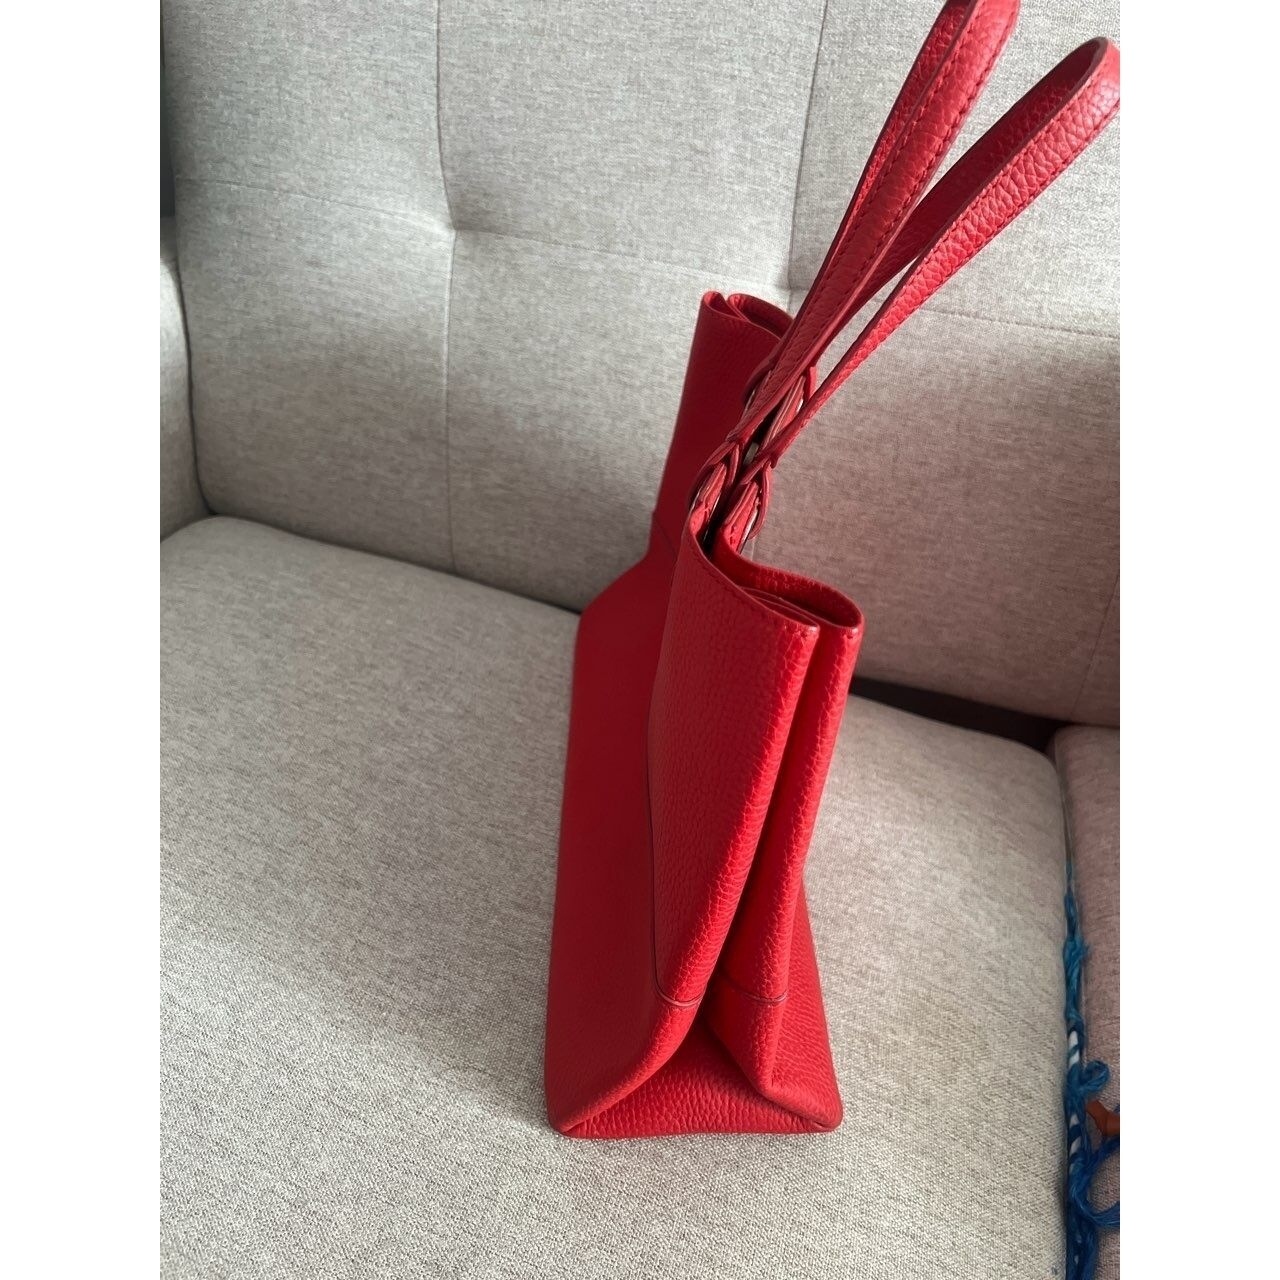 Oroton Red Handbag